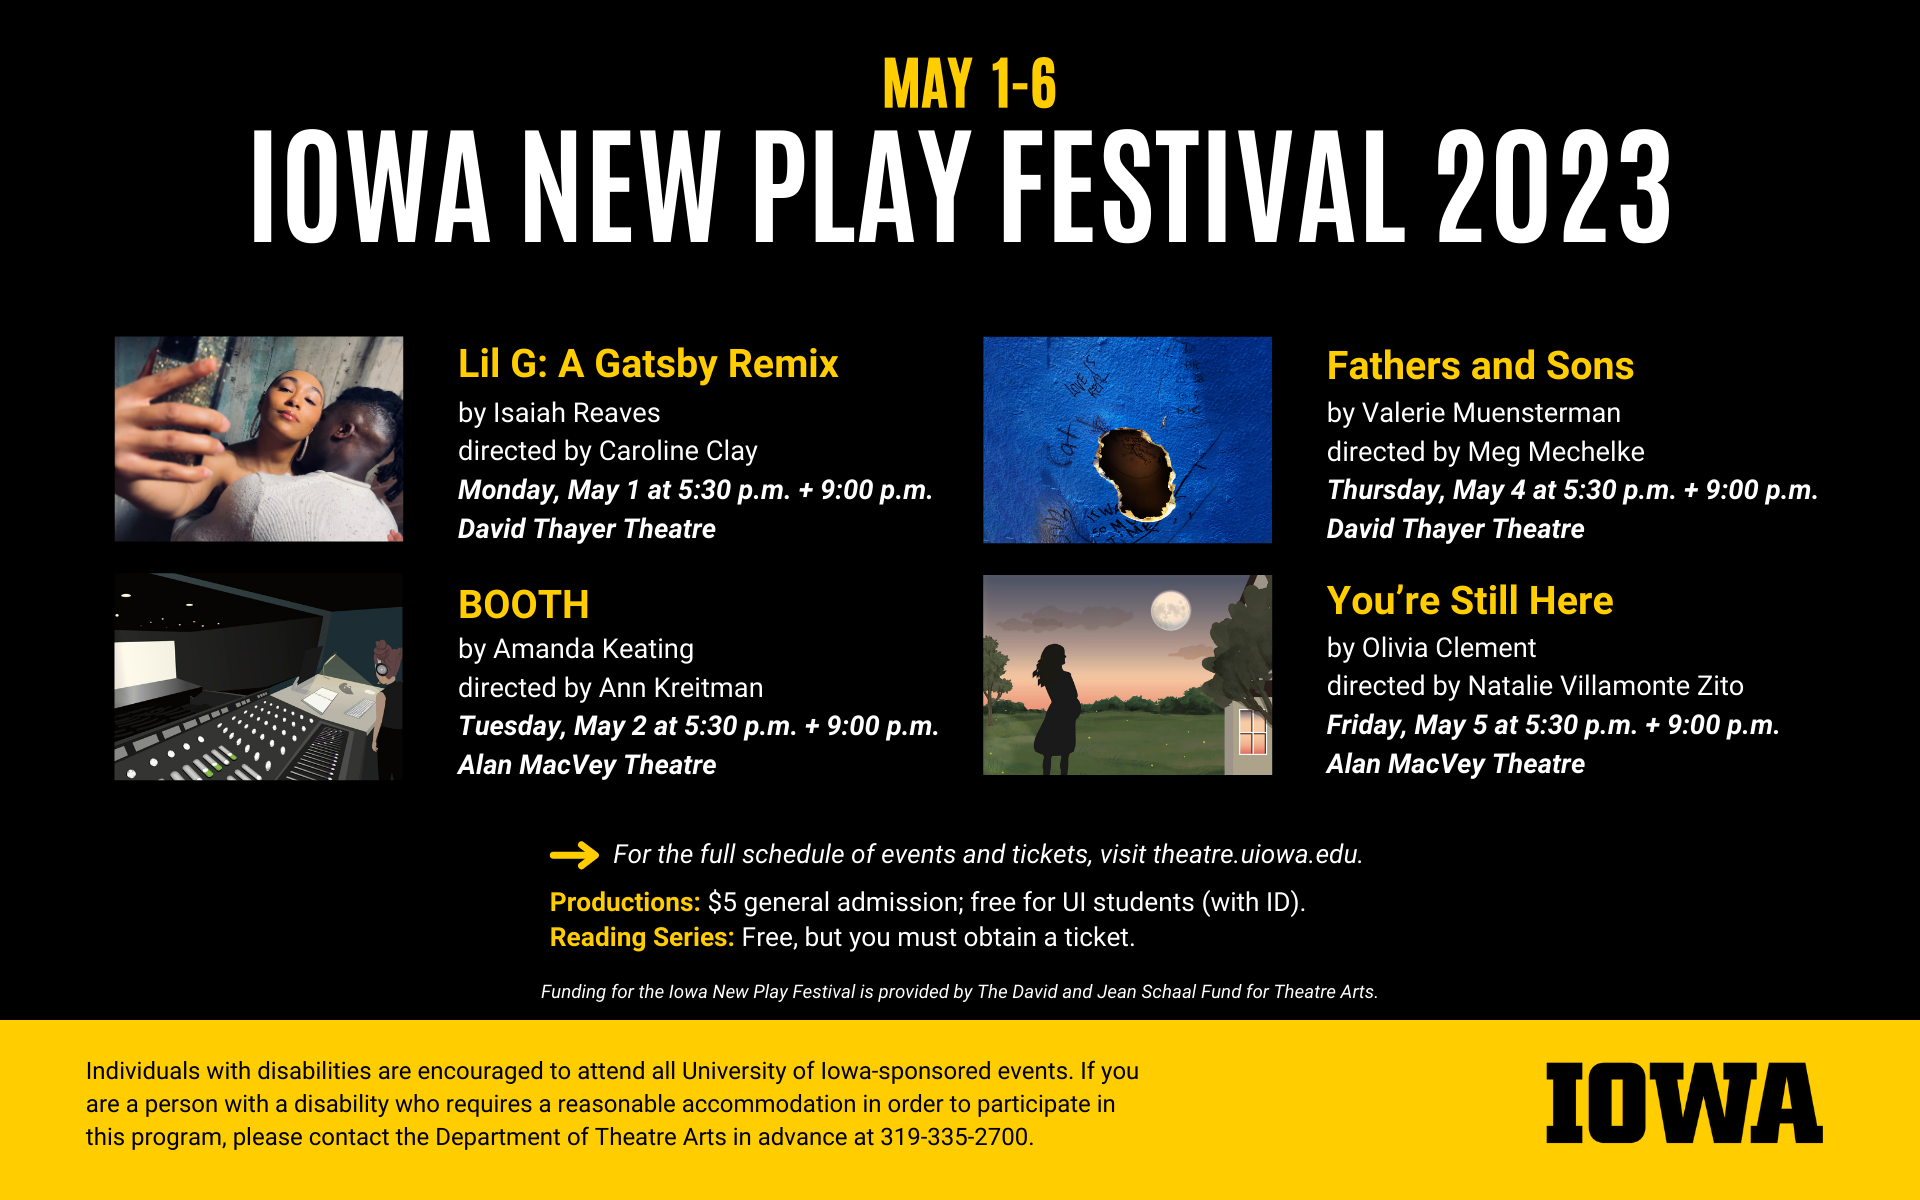 New Play Festival 2023